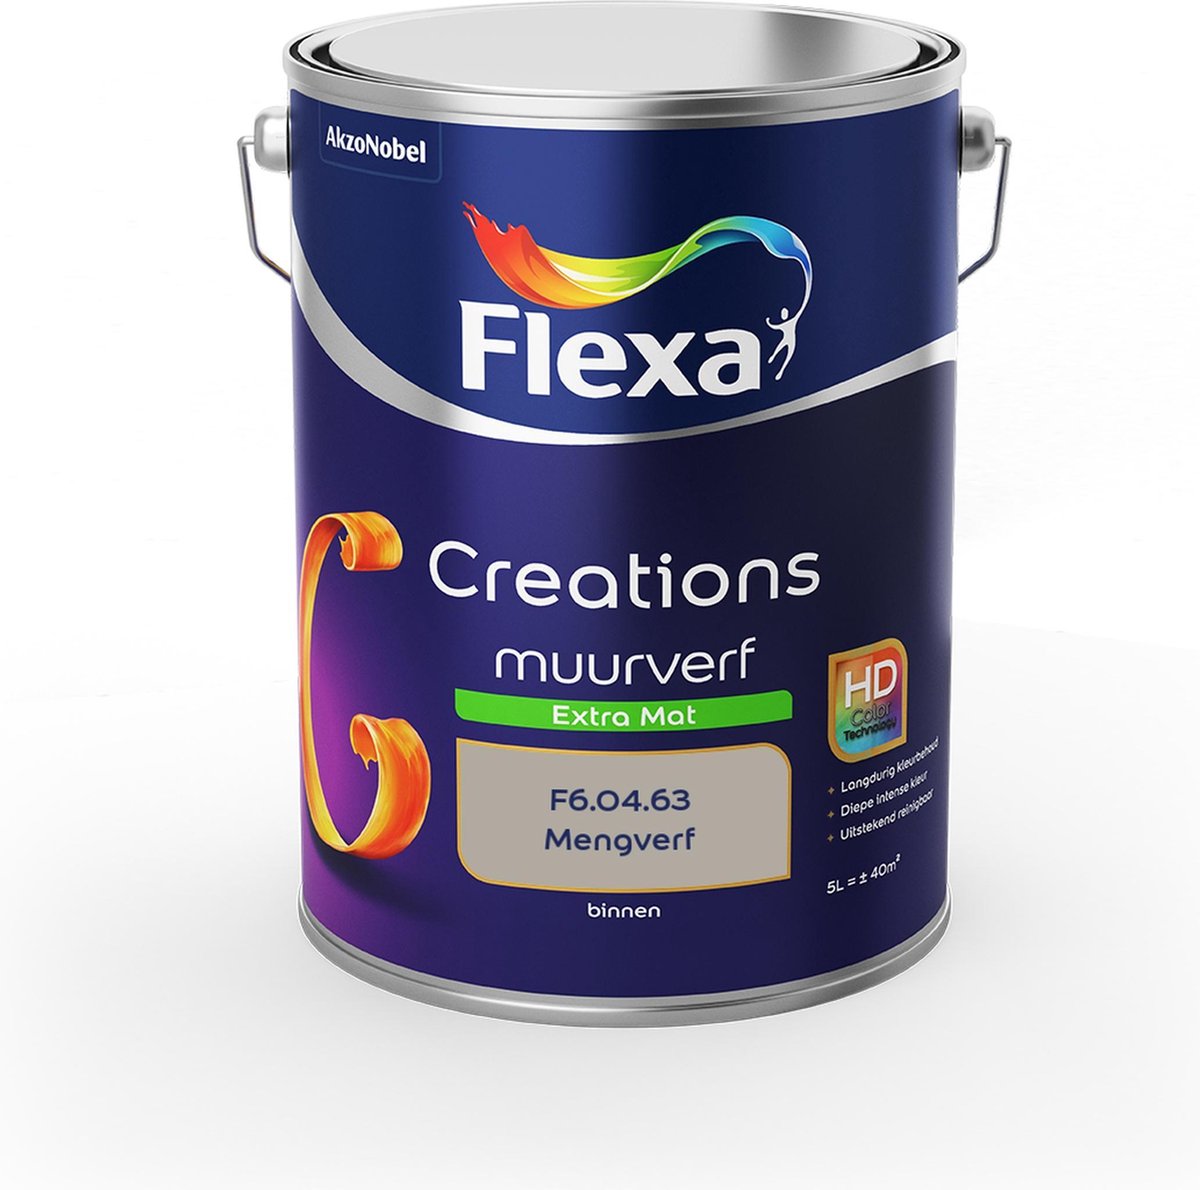 Flexa Creations Muurverf - Extra Mat - Colorfutures 2019 - F6.04.63 - 5 liter